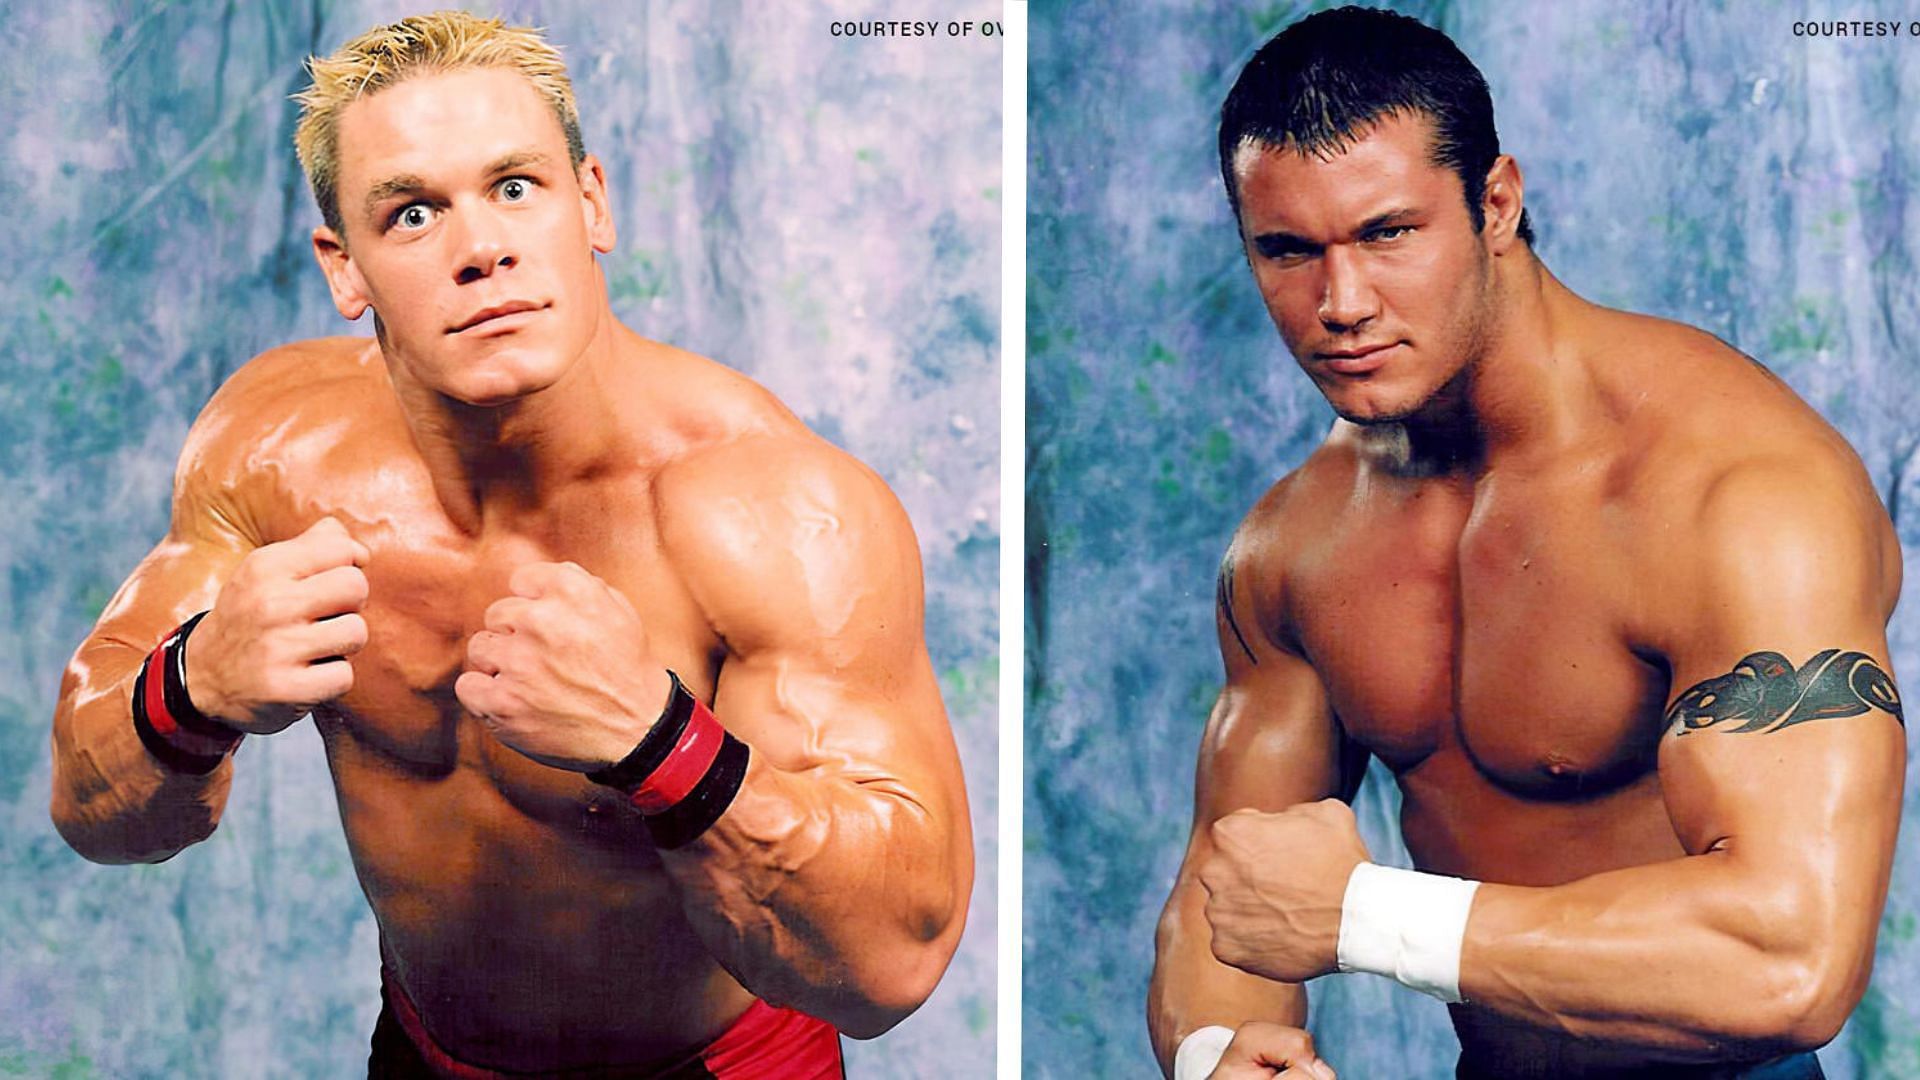 Randy Orton and John Cena at OVW